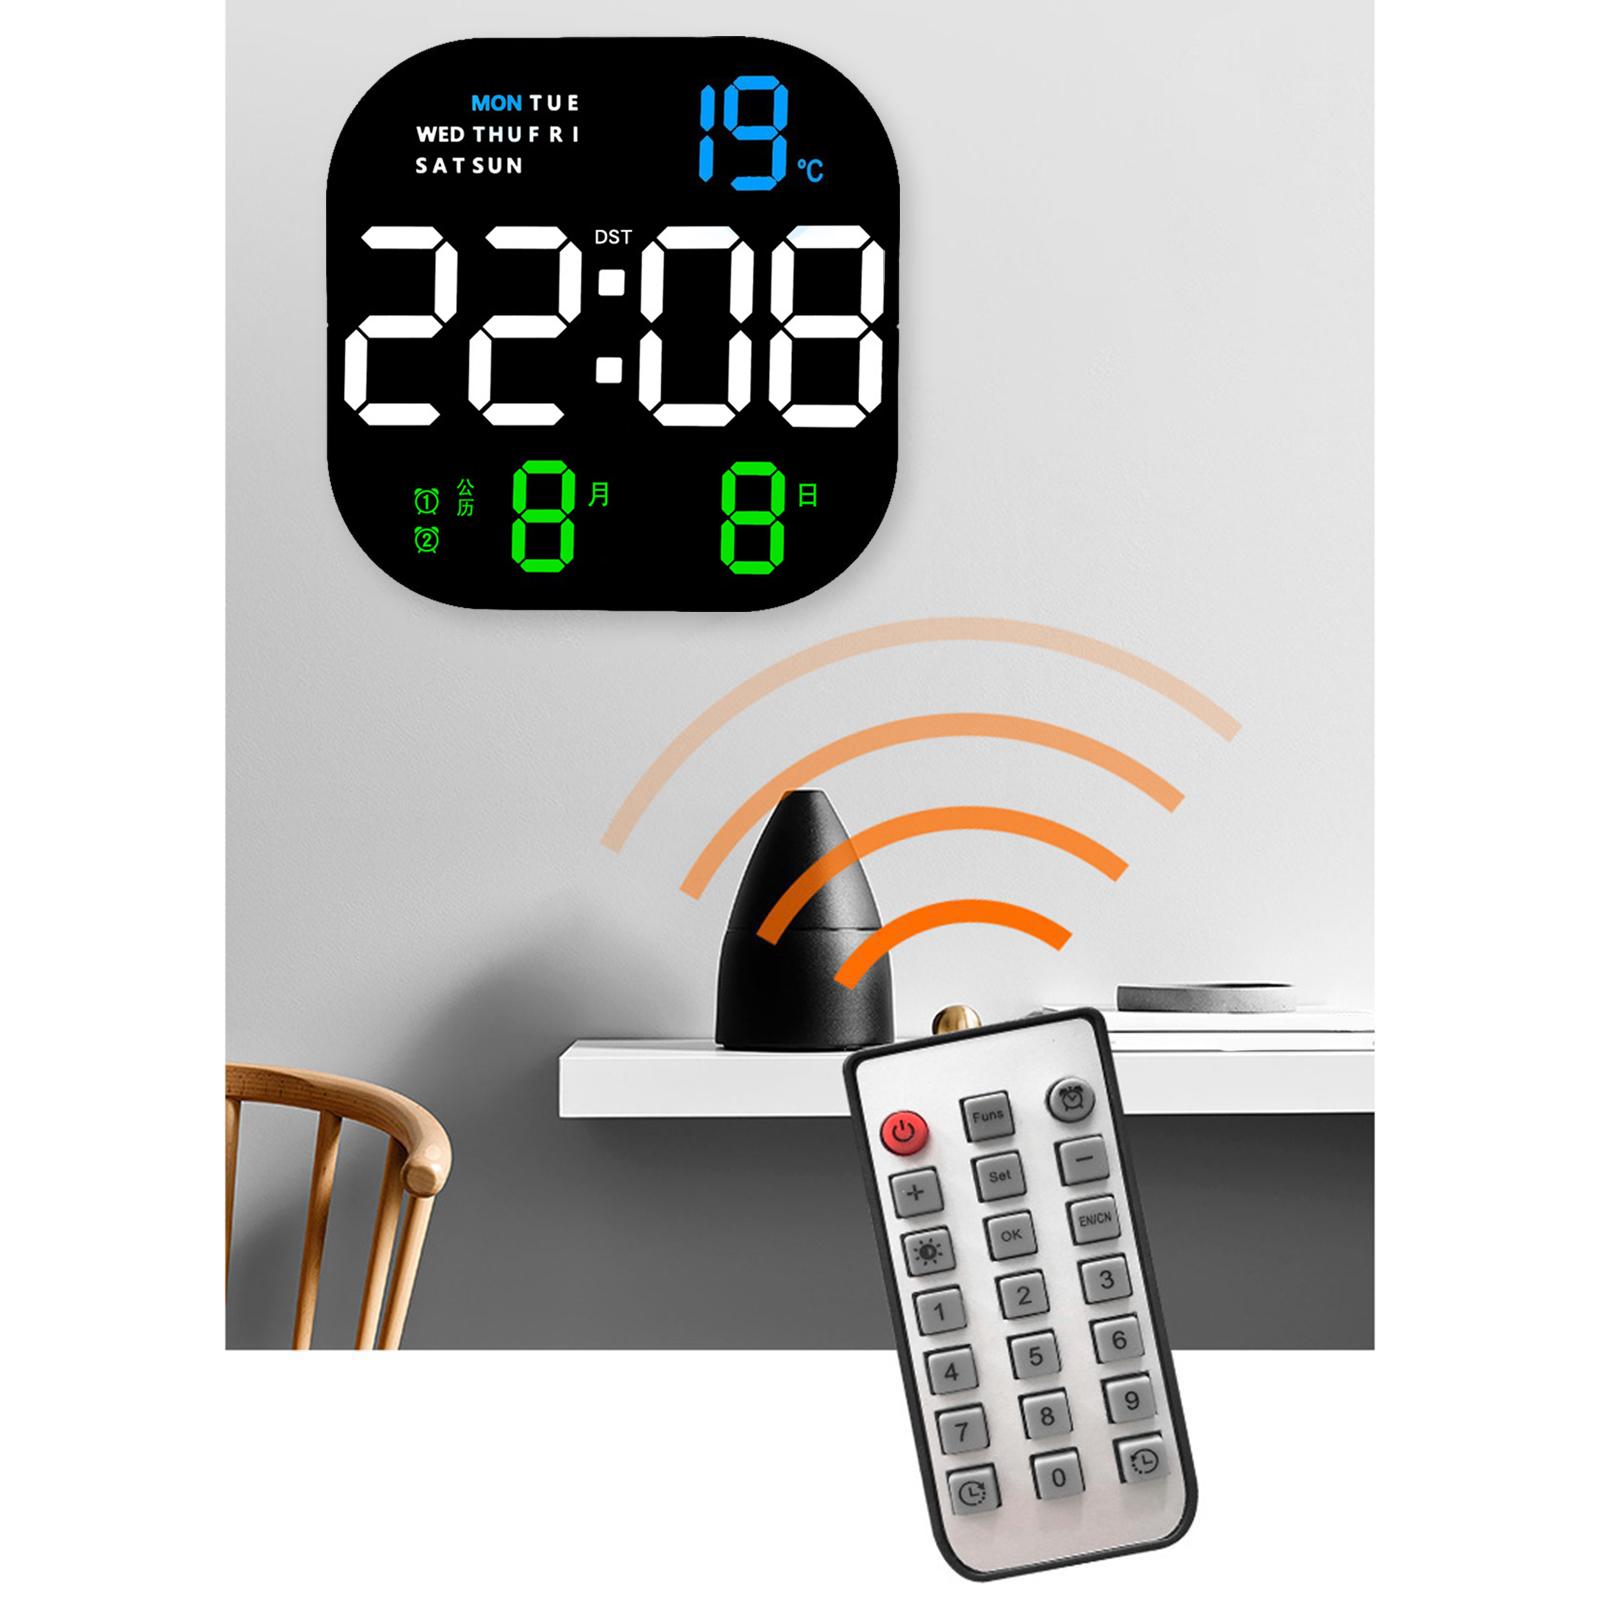 LED Desktop Alarm Clock Adjustable Brightness Digital Wall Clock for School Blue Green Display